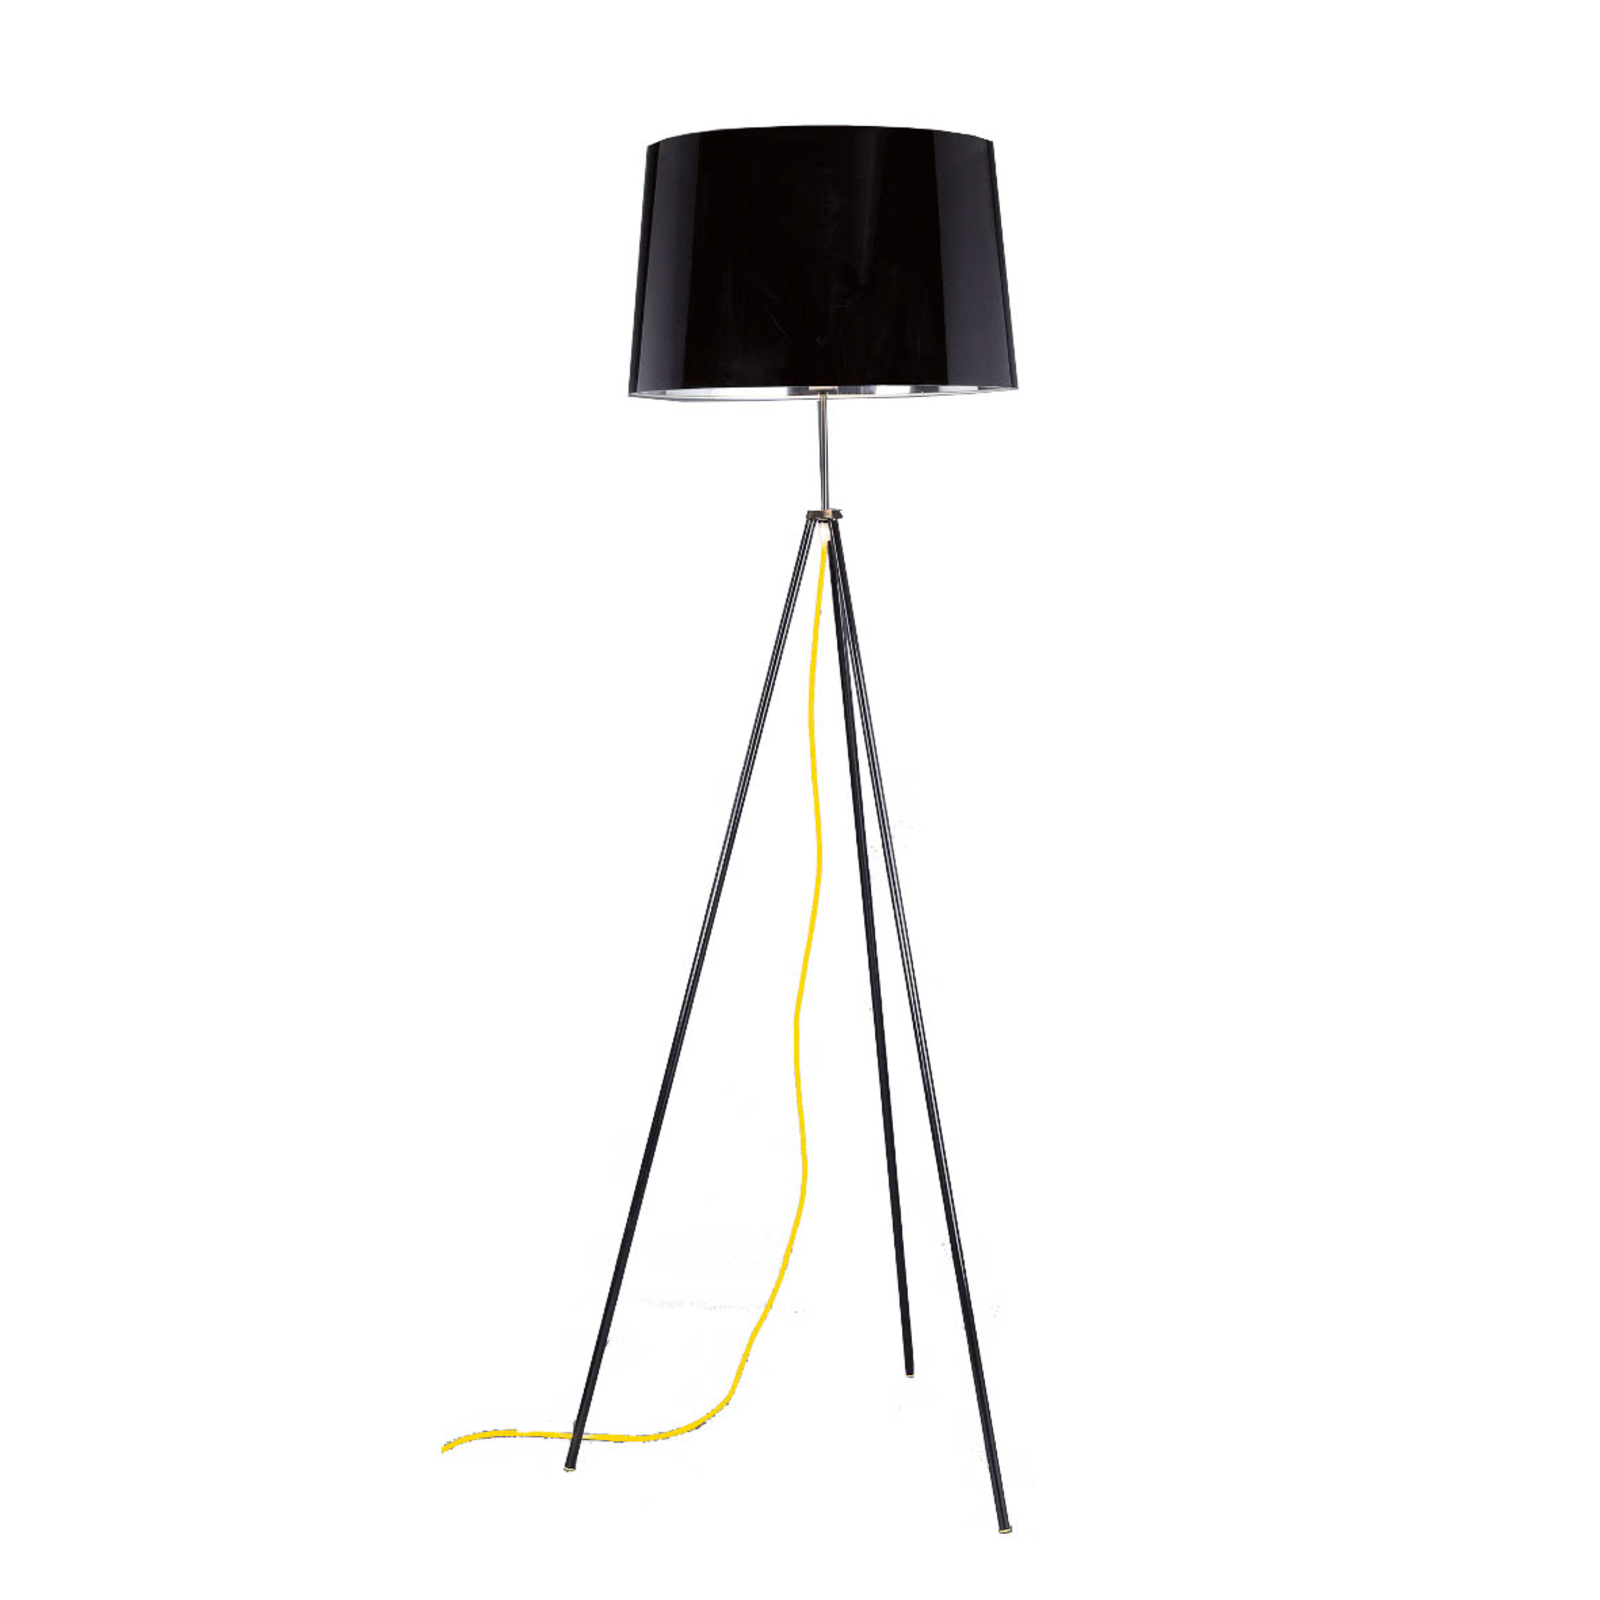 Aluminor Tropic floor lamp black, yellow cable